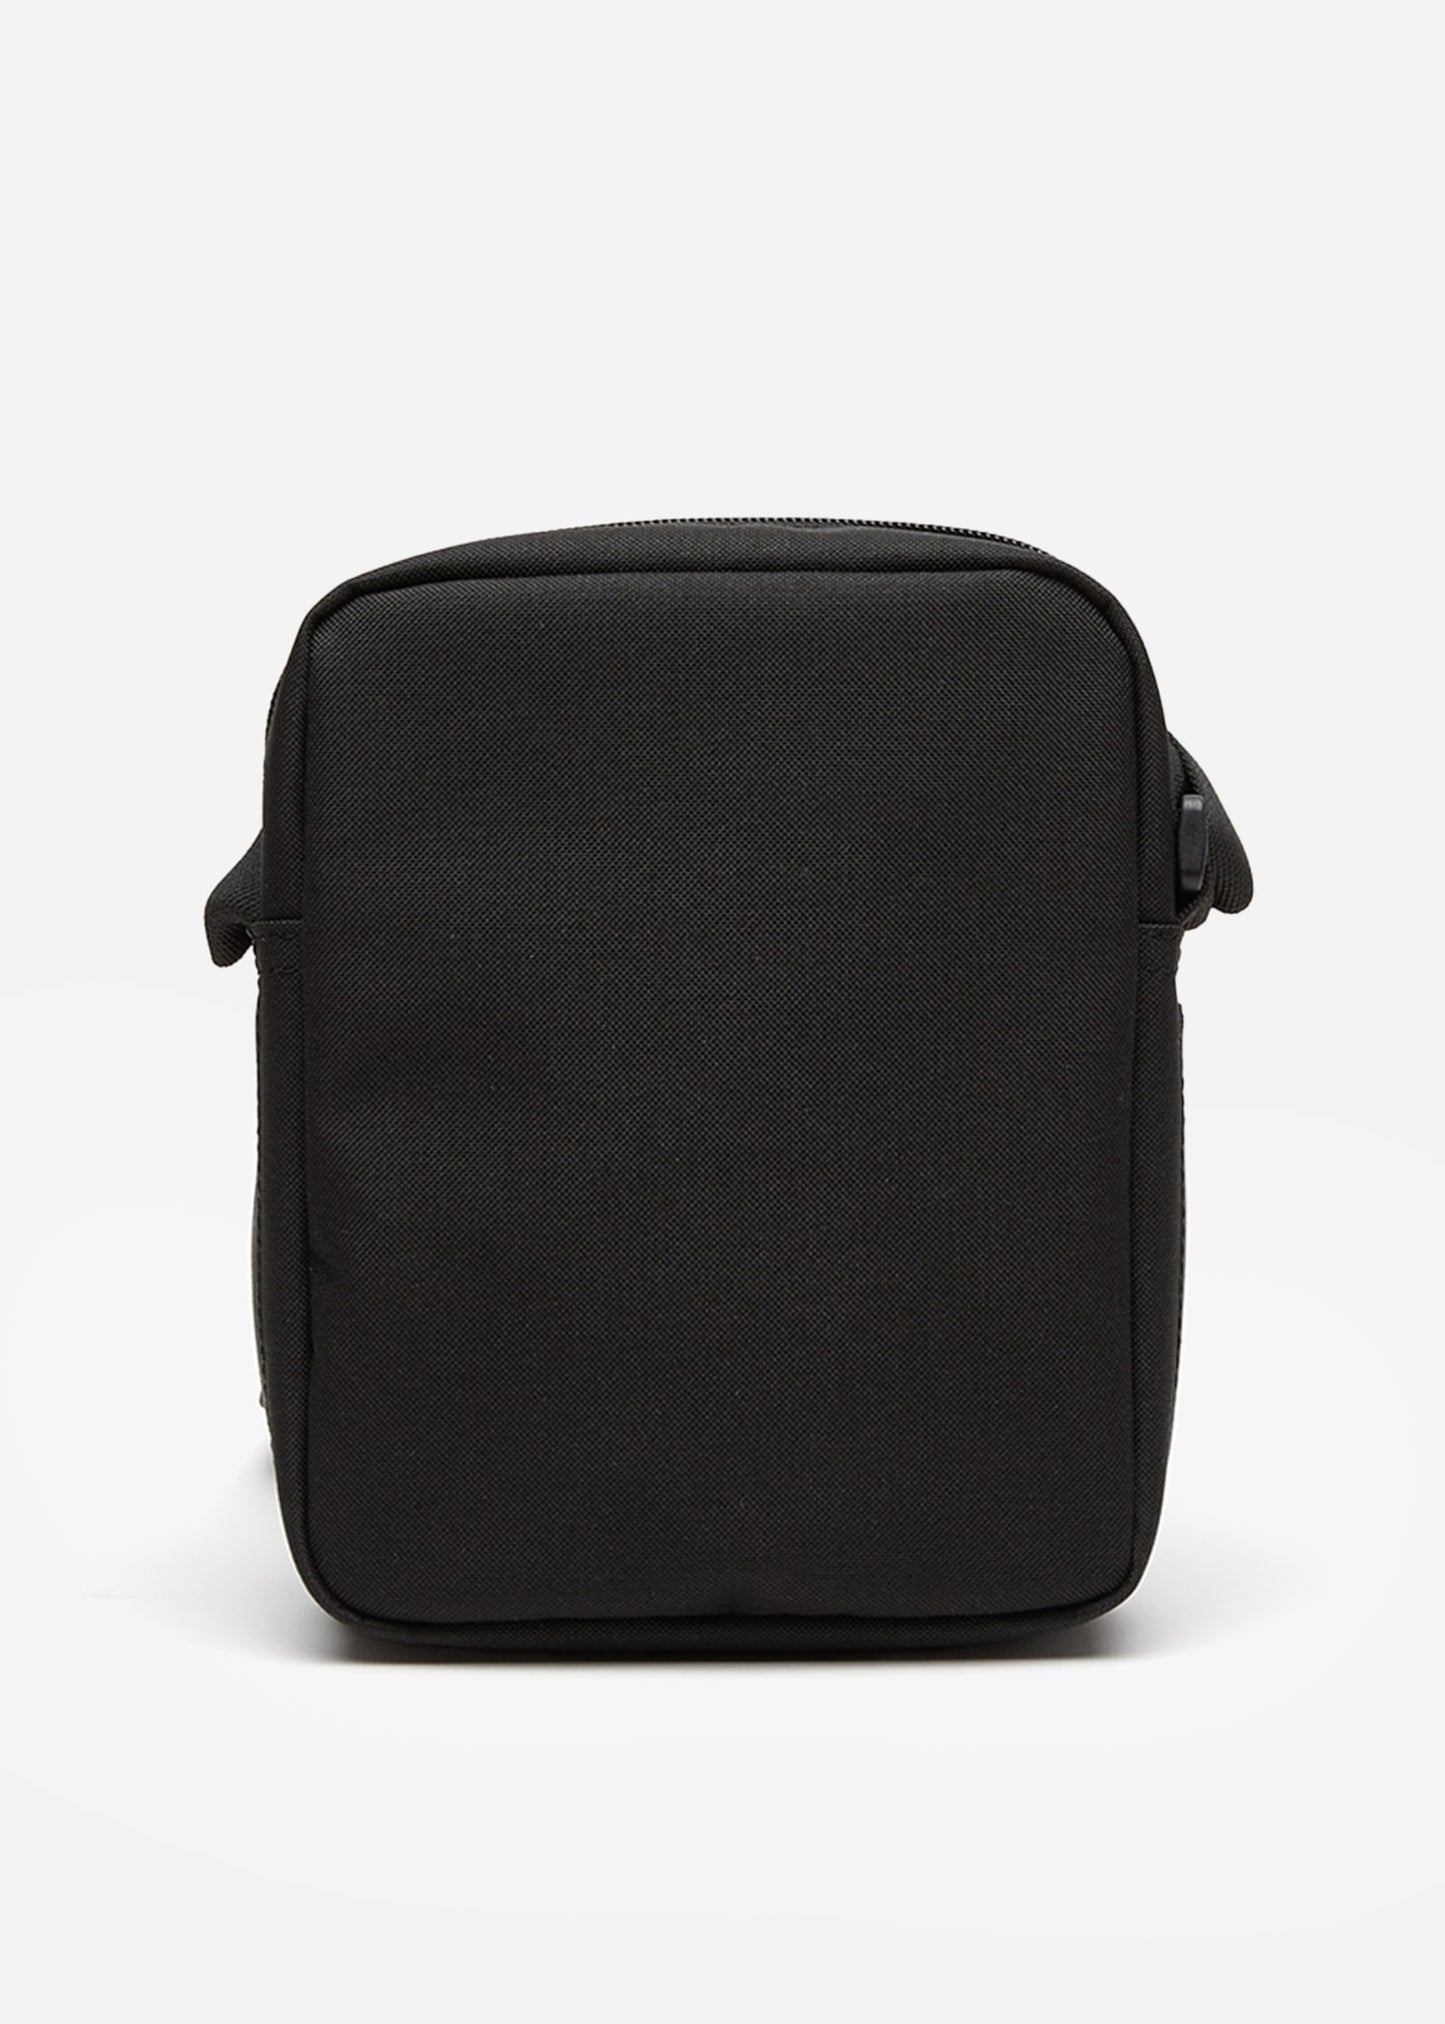 Lacoste Tassen  Bag lacoste - zwart 